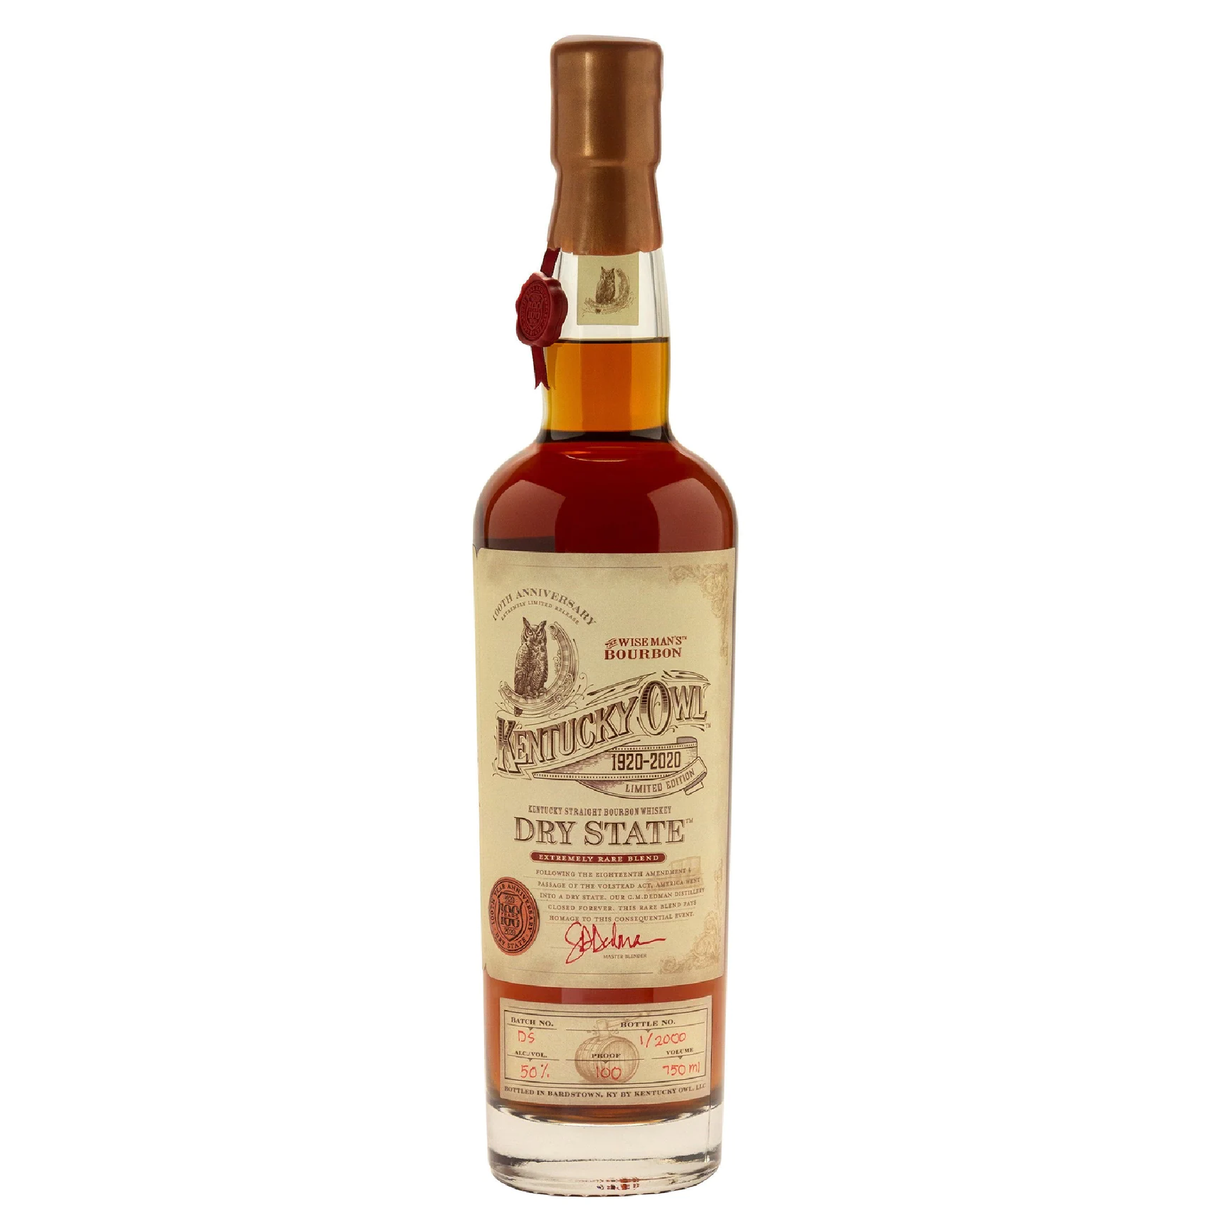 Kentucky Owl Dry State Kentucky Straight Bourbon Whiskey - Liquor Geeks